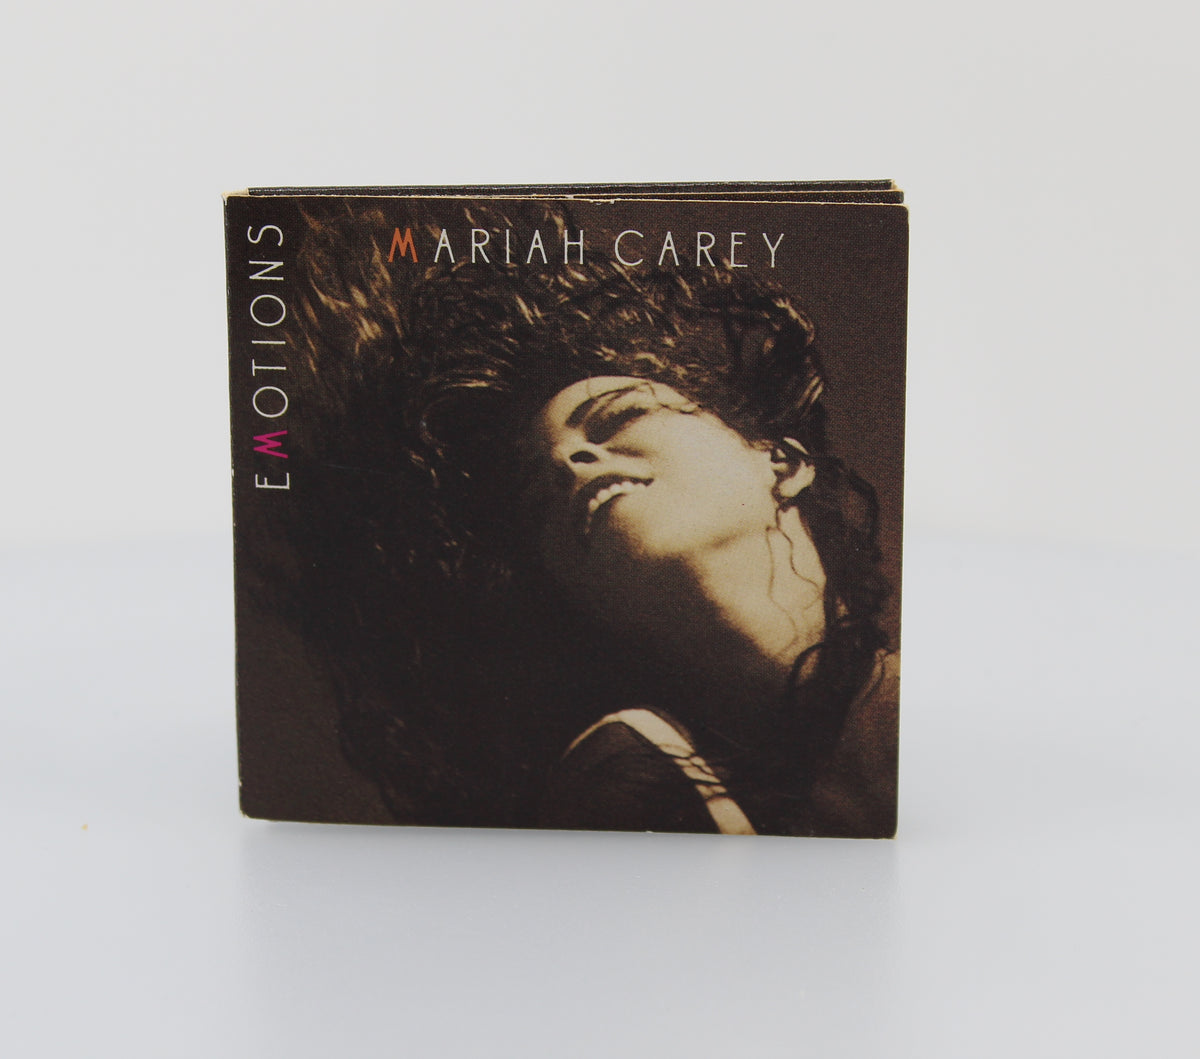 Mariah Carey, Emotions, CD Mini Single, Europe 1991 (CD 638)